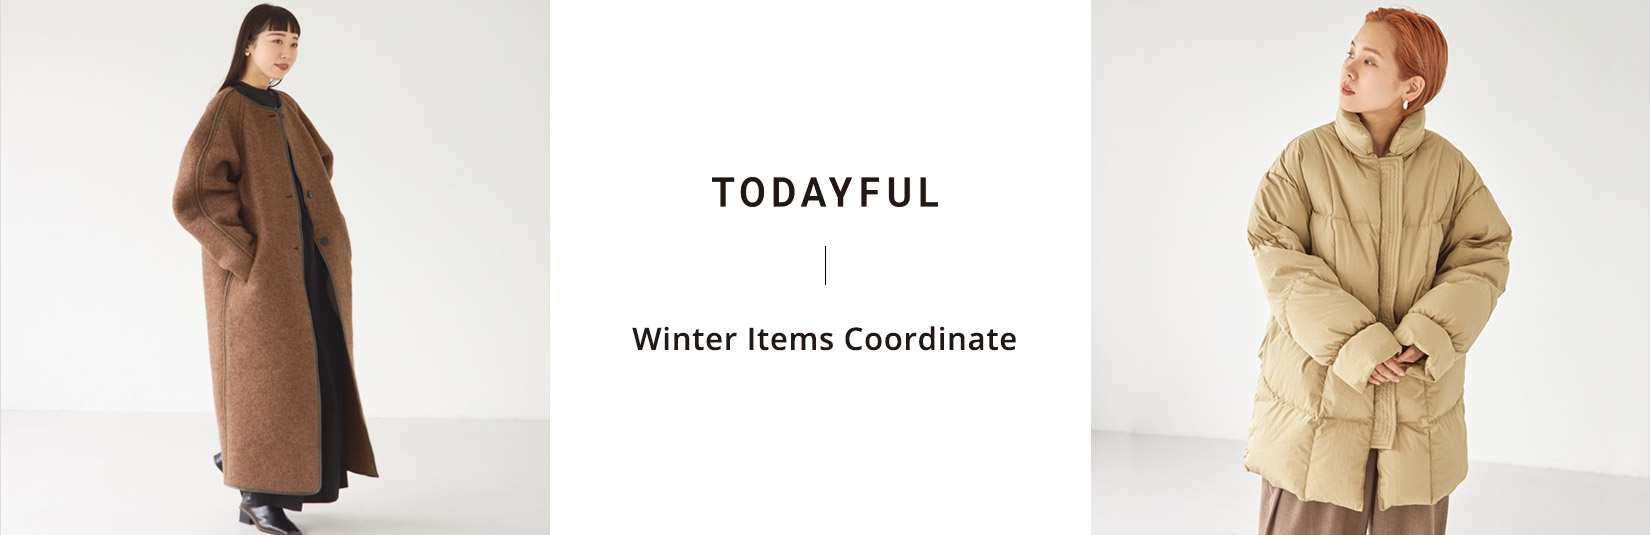 TODAYFUL Winter Items Coordinate